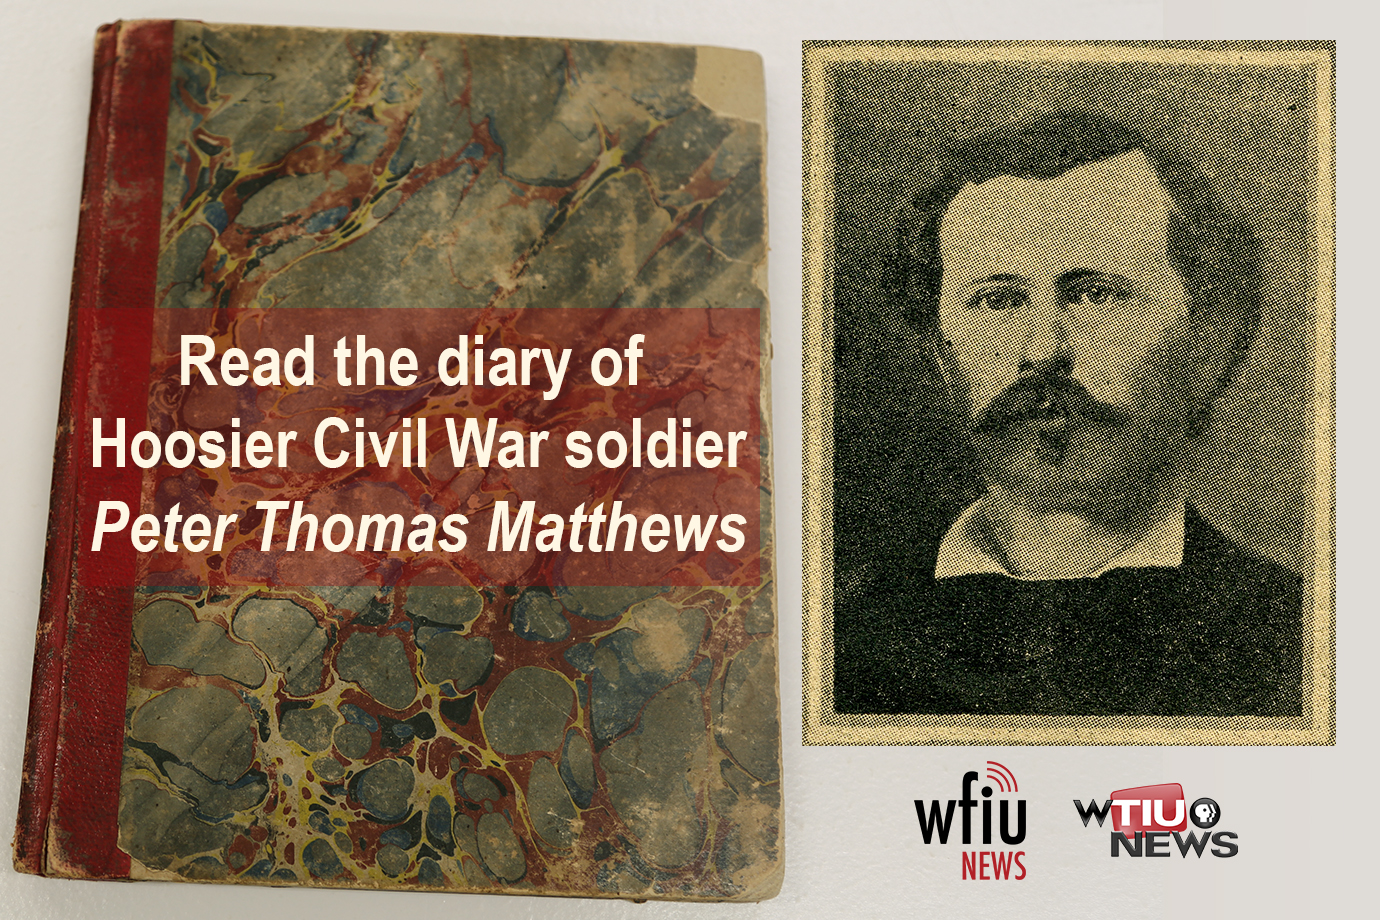 peter thomas matthews and his diary